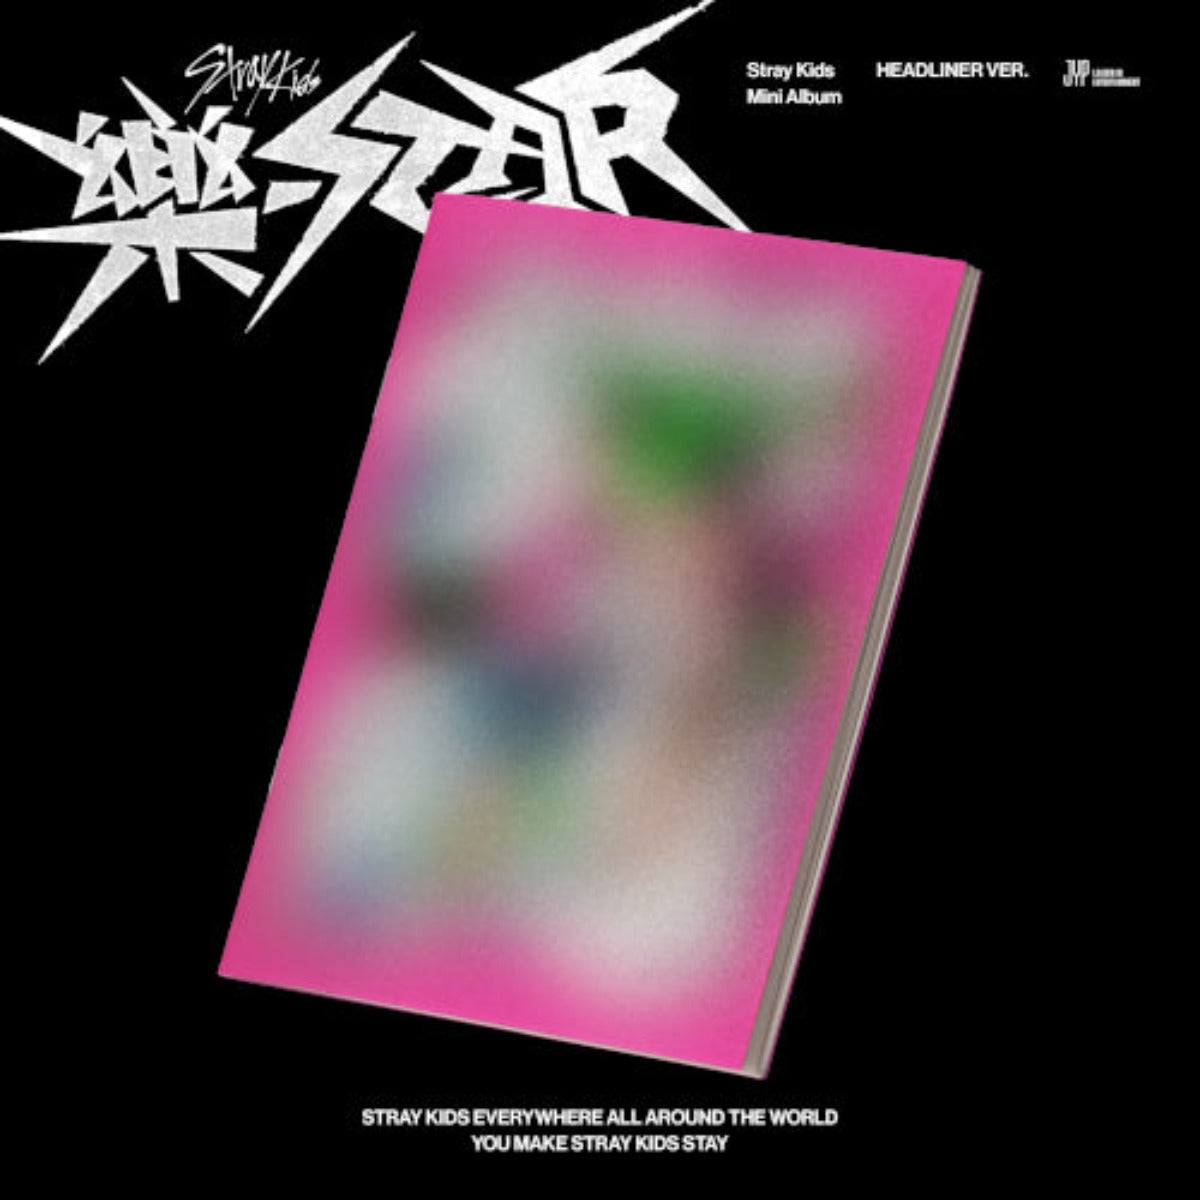 Stray Kids 8th Mini Album - ROCK STAR (HEADLINER VERSION)